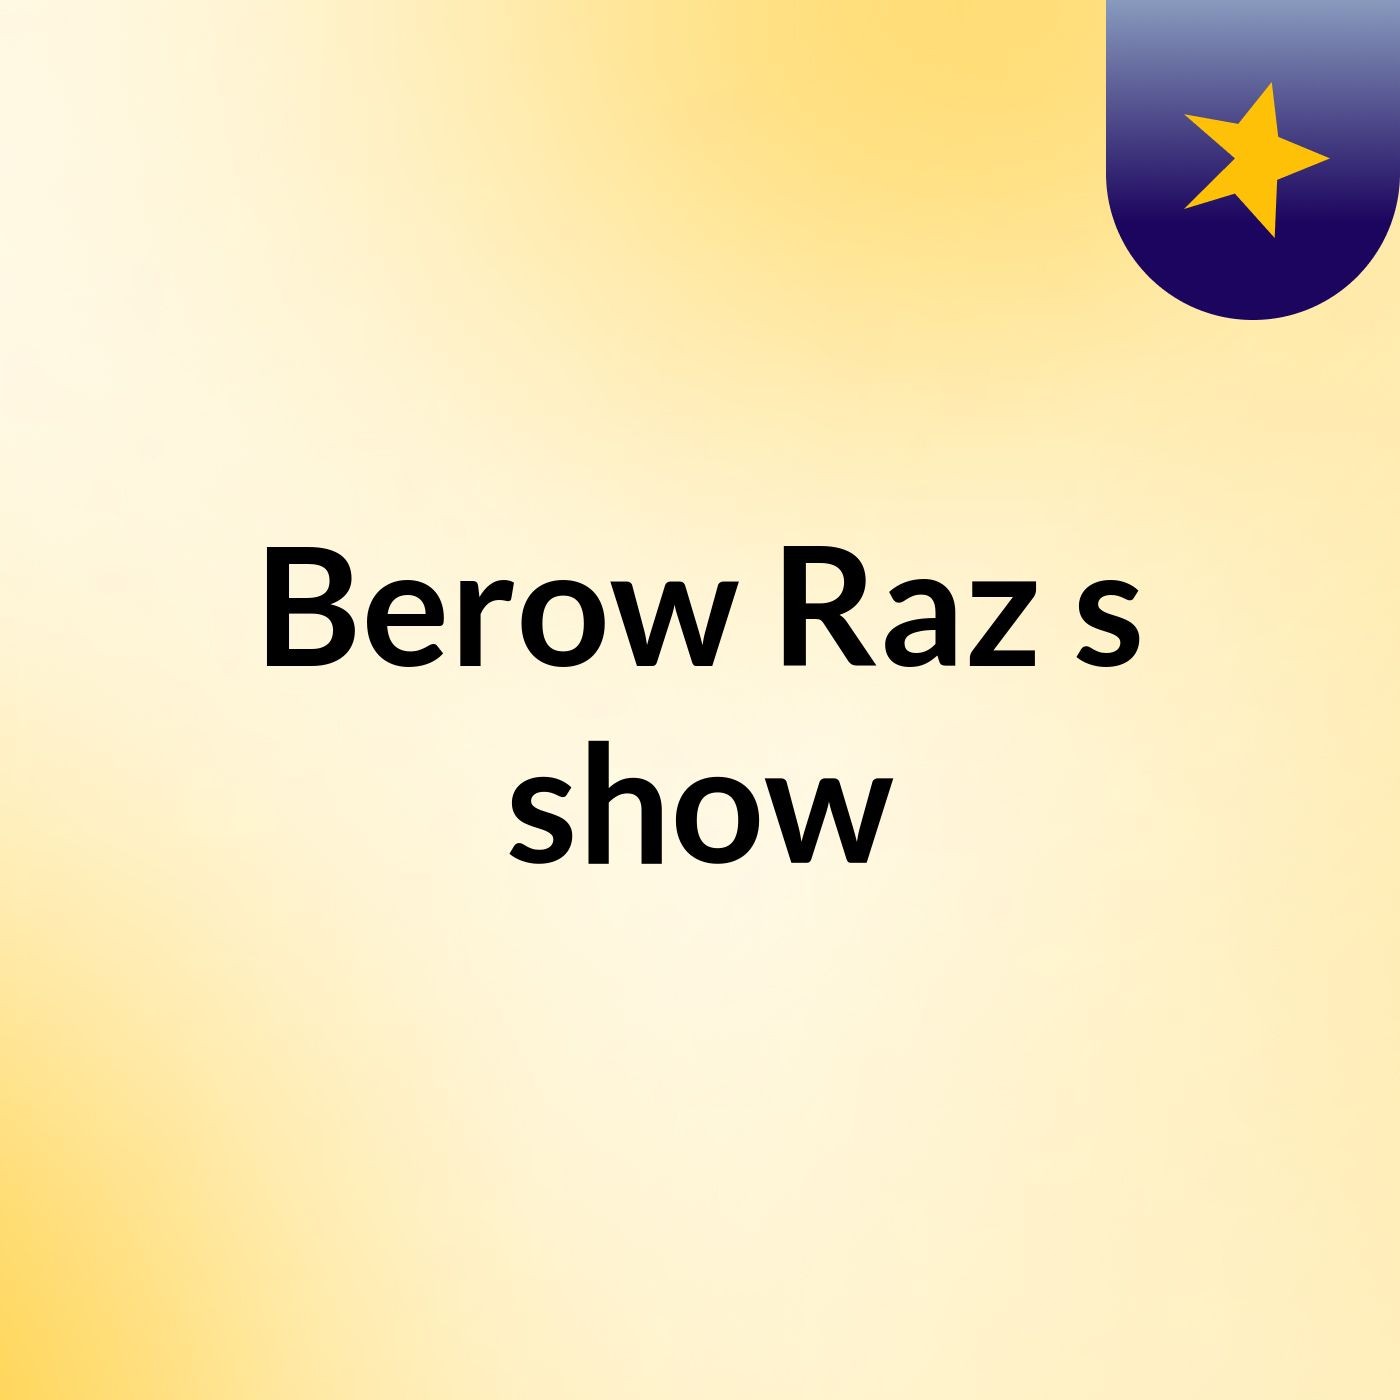 Berow Raz's show